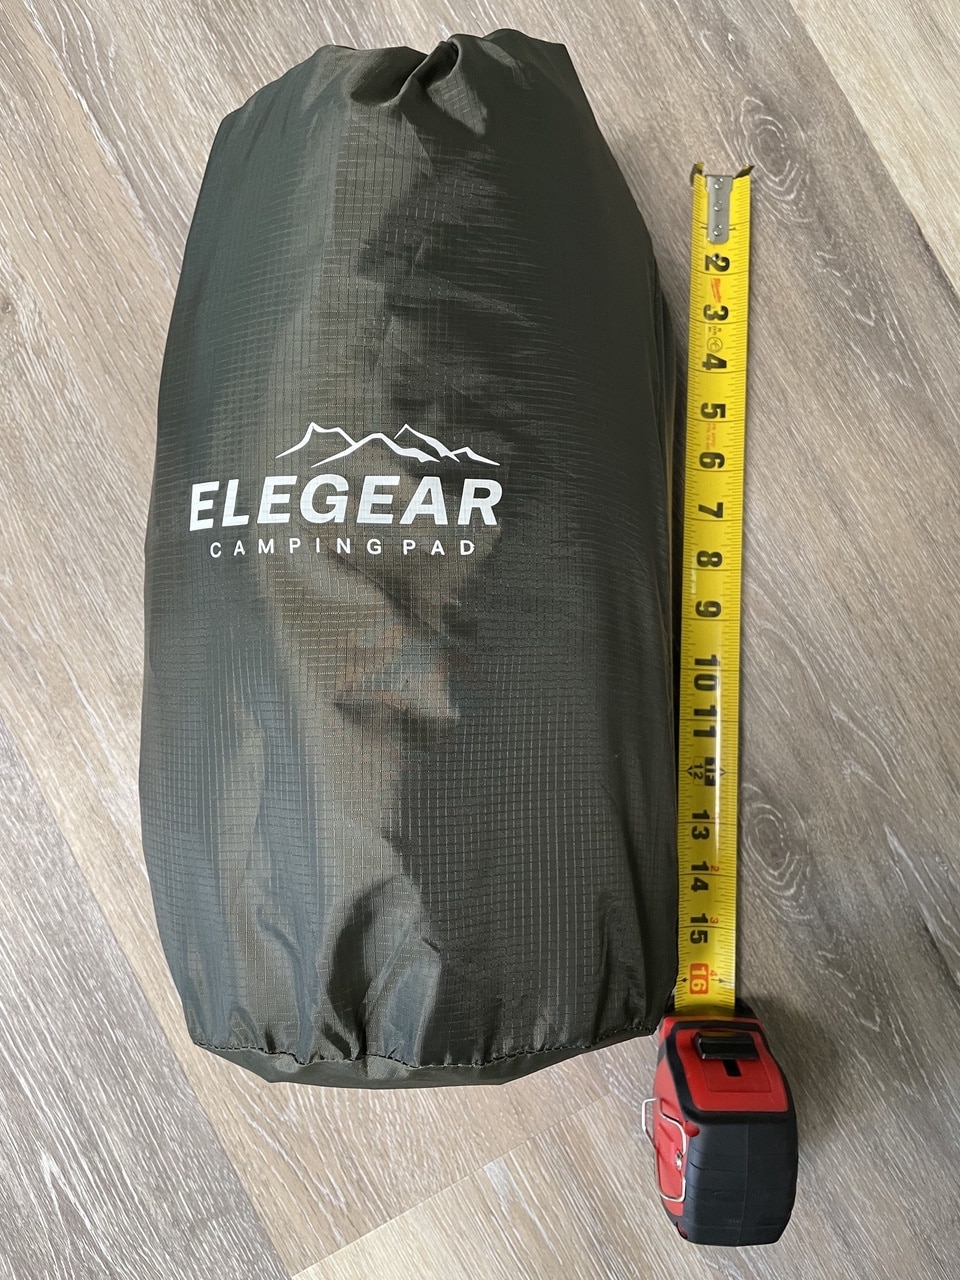 Elegear Double Sleeping Pad in bag with pump